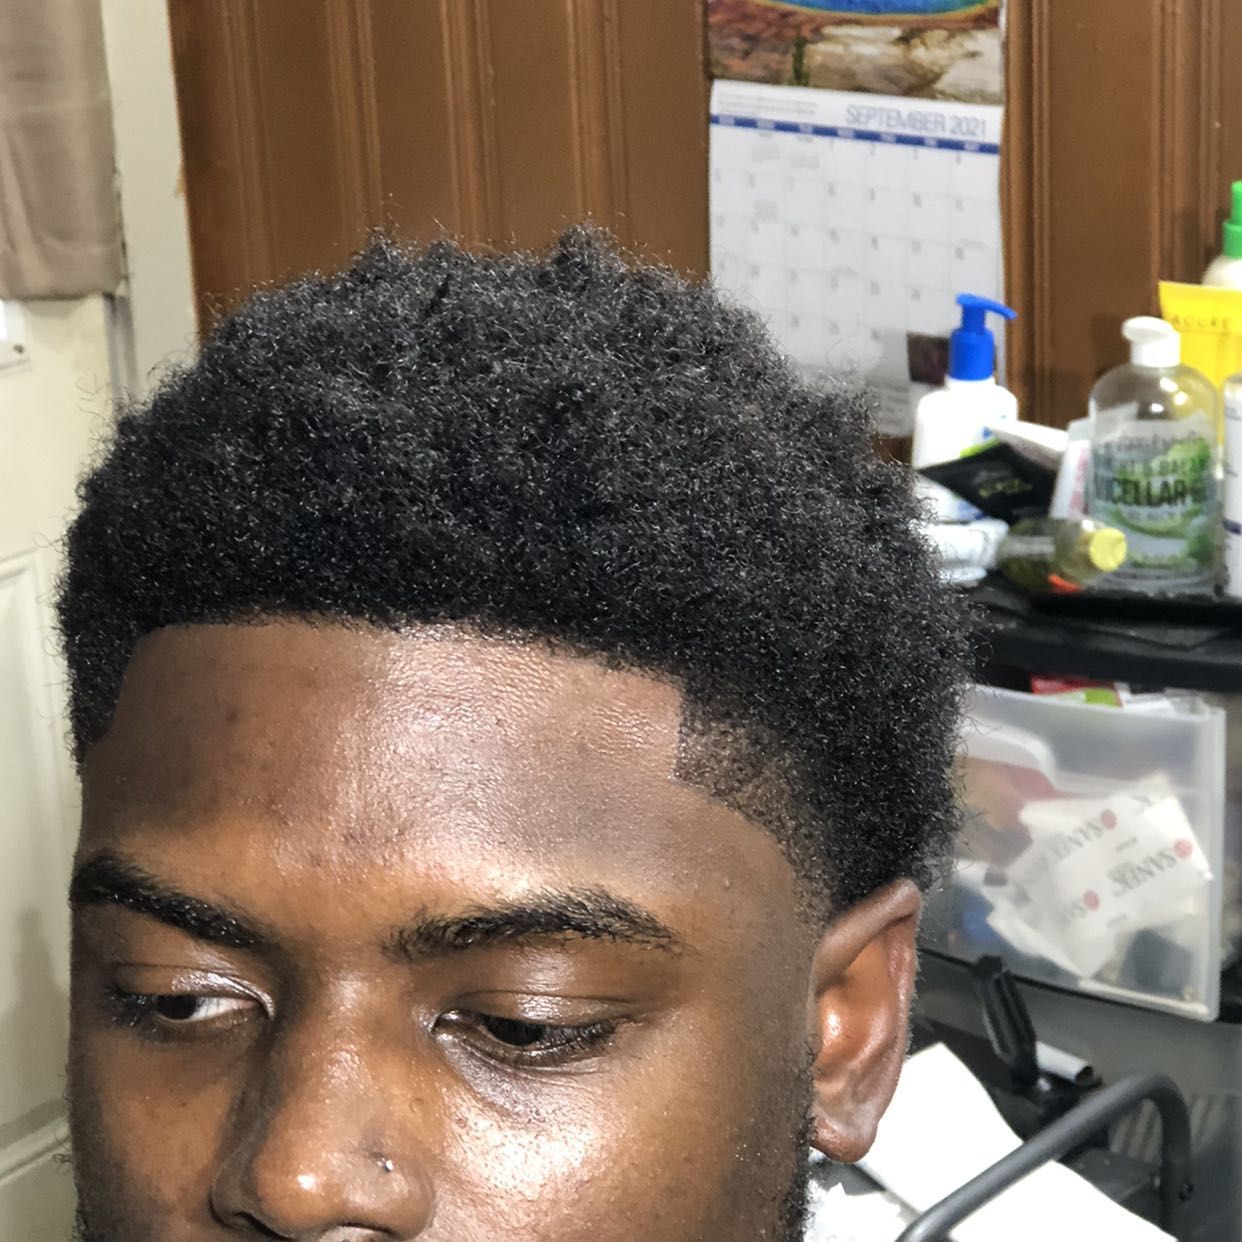 Teenager Haircut (14-18) portfolio